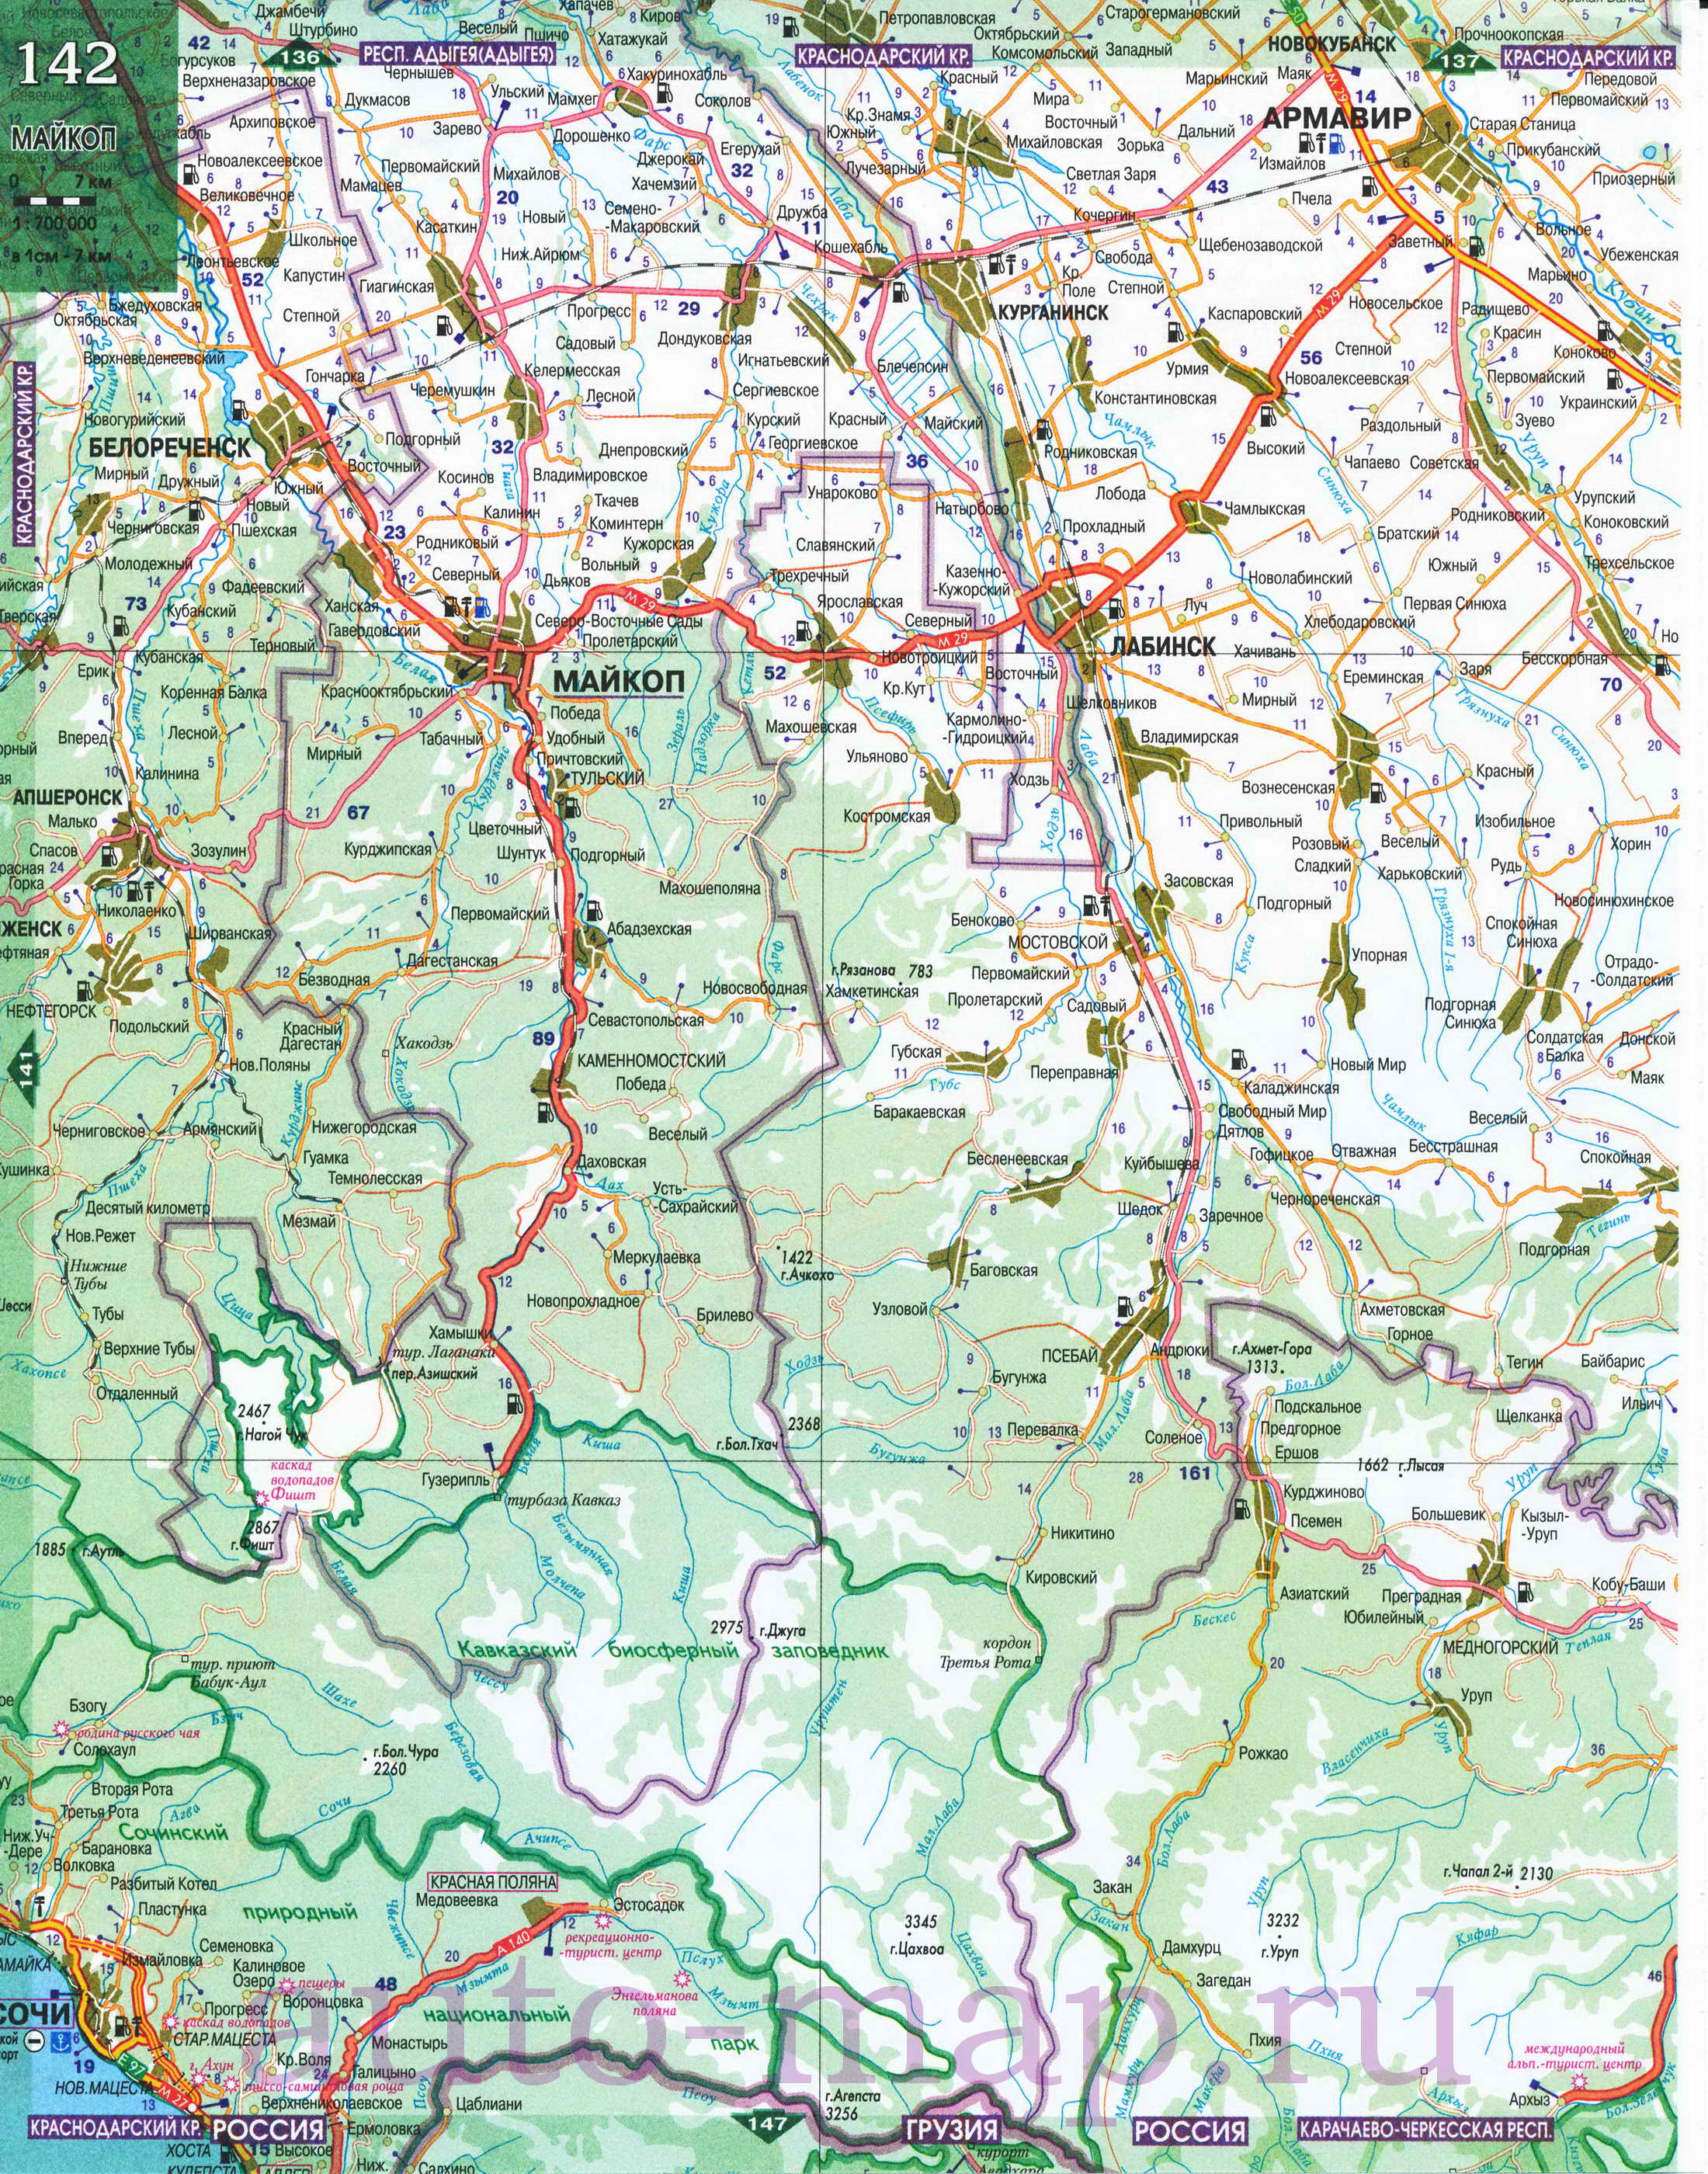  Карта Кавказа. Подробная карта Кавказа. Карта автомобильных дорог Кавказа, B0 - 